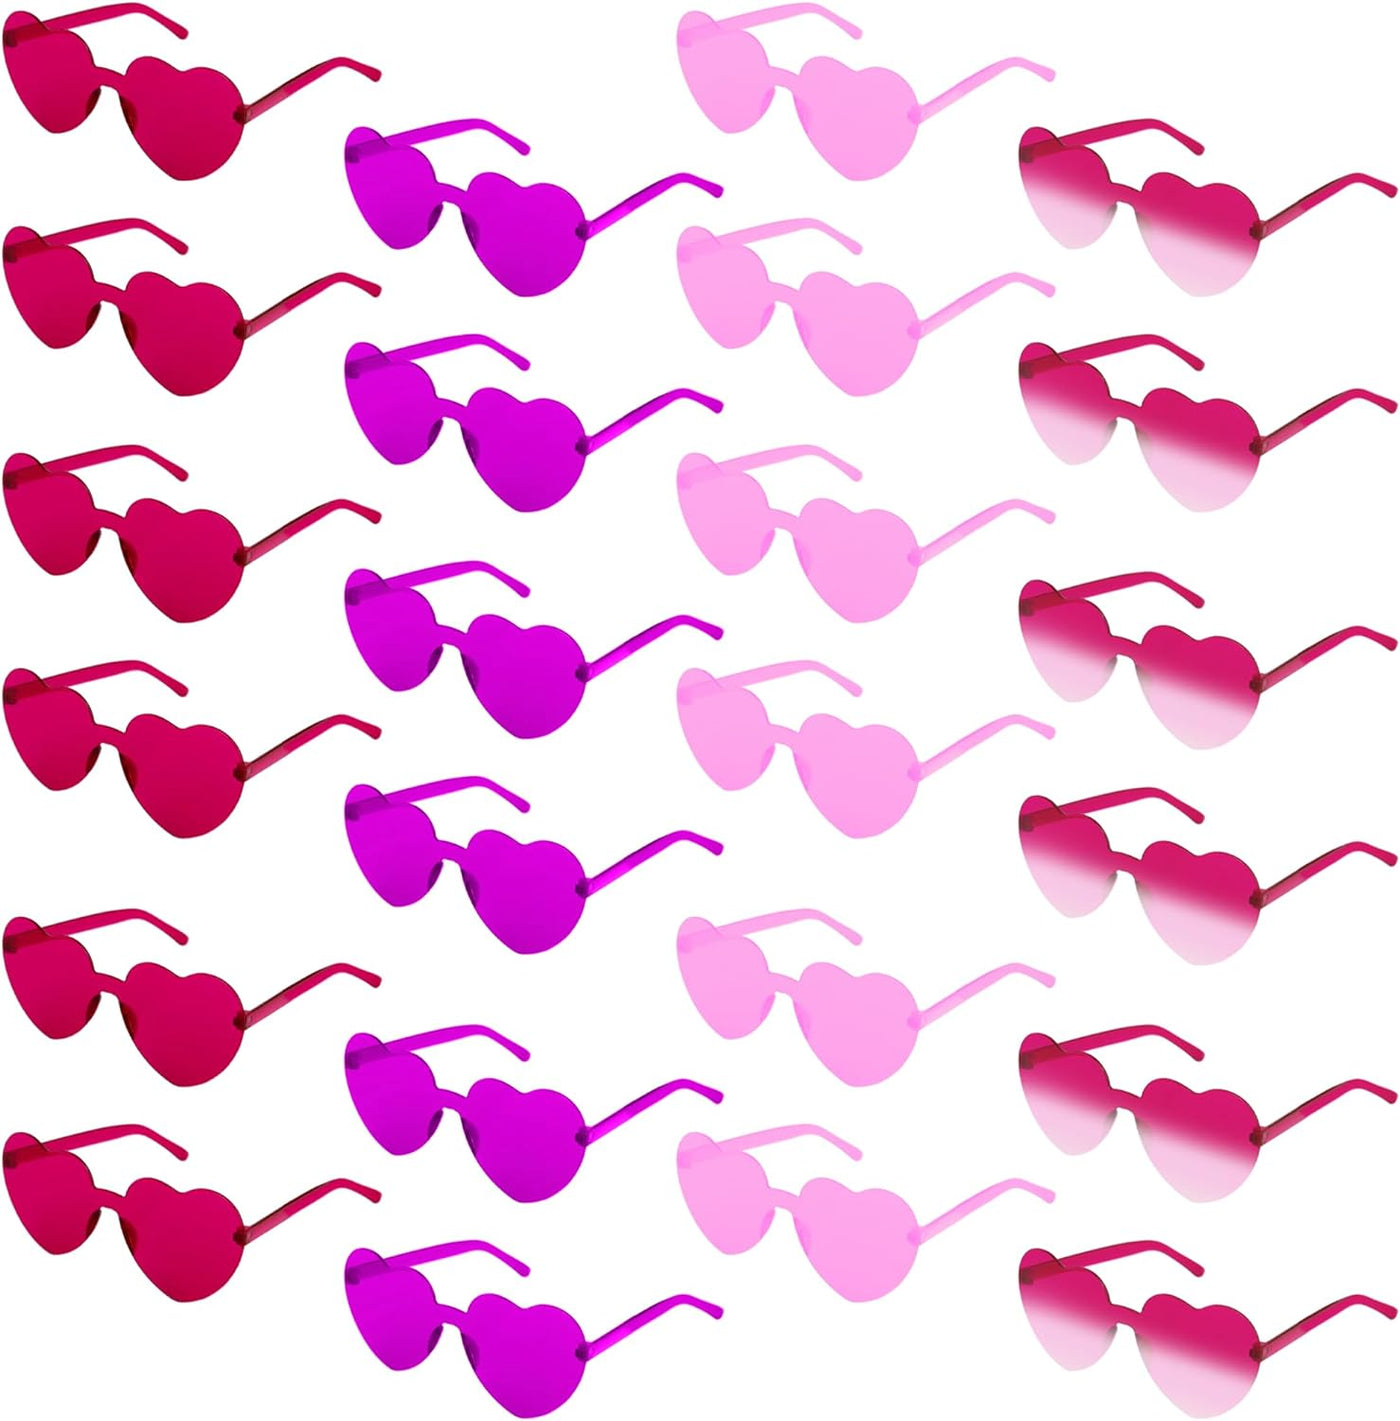 ArtCreativity Heart Glasses Pack - 24 Heart Glasses (Bulk) - Heart Shaped Glasses in 4 Colors - Heart Sunglasses for Women, Kids, Bachelorette Parties - Heart Accessories for Girls and Boys